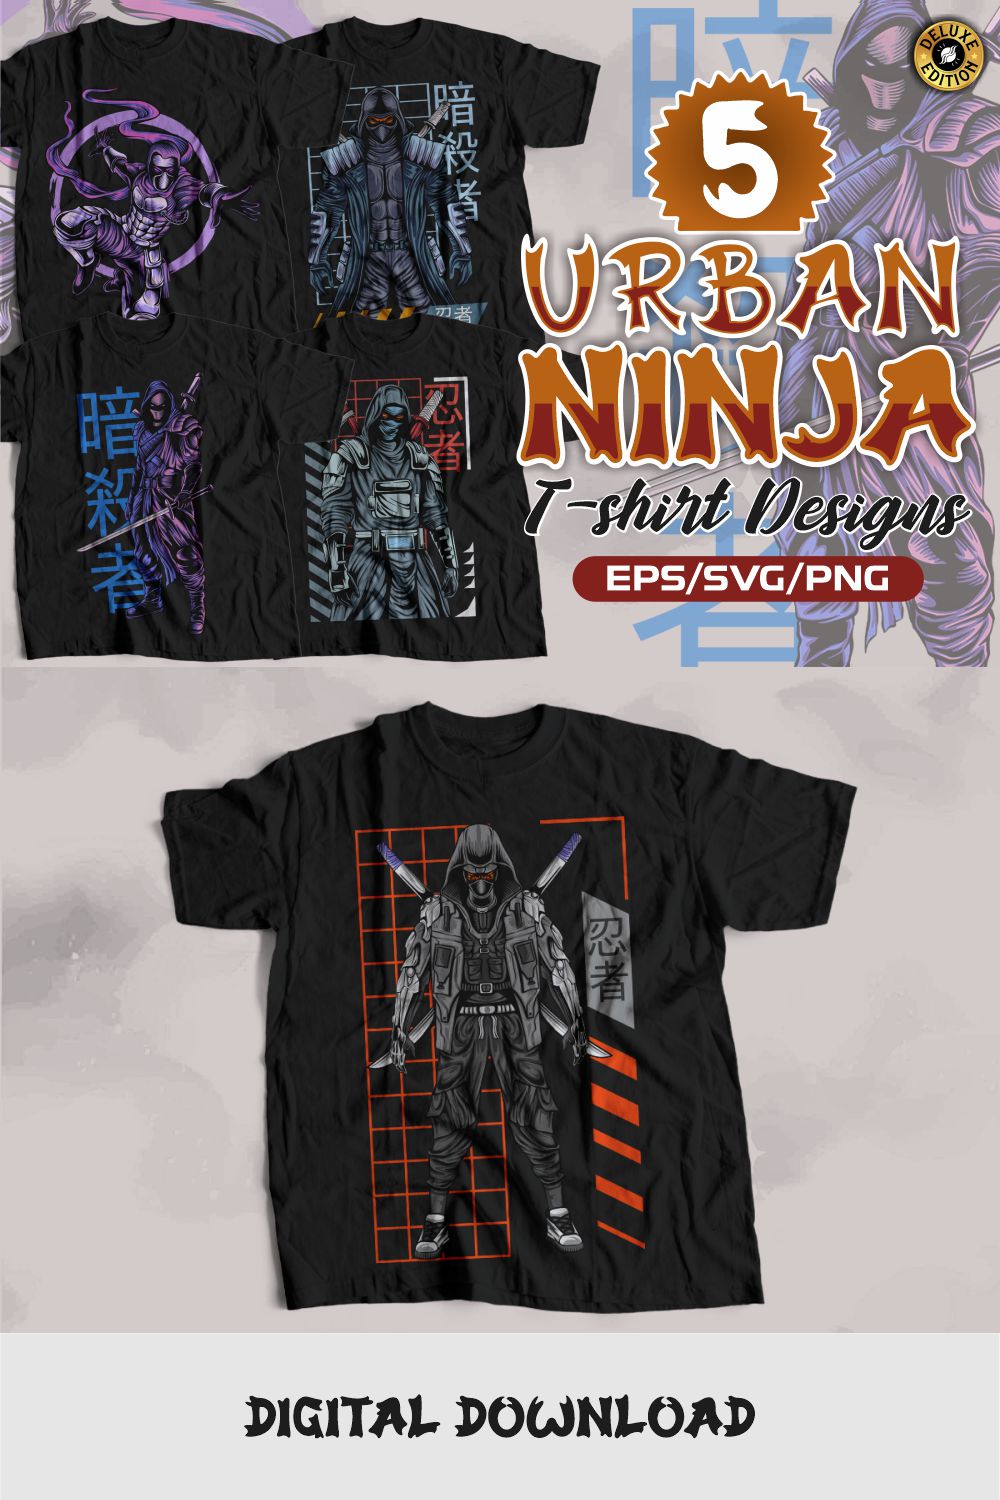 Japanese Urban Ninja Streetwear T-shirt Designs Bundle pinterest preview image.